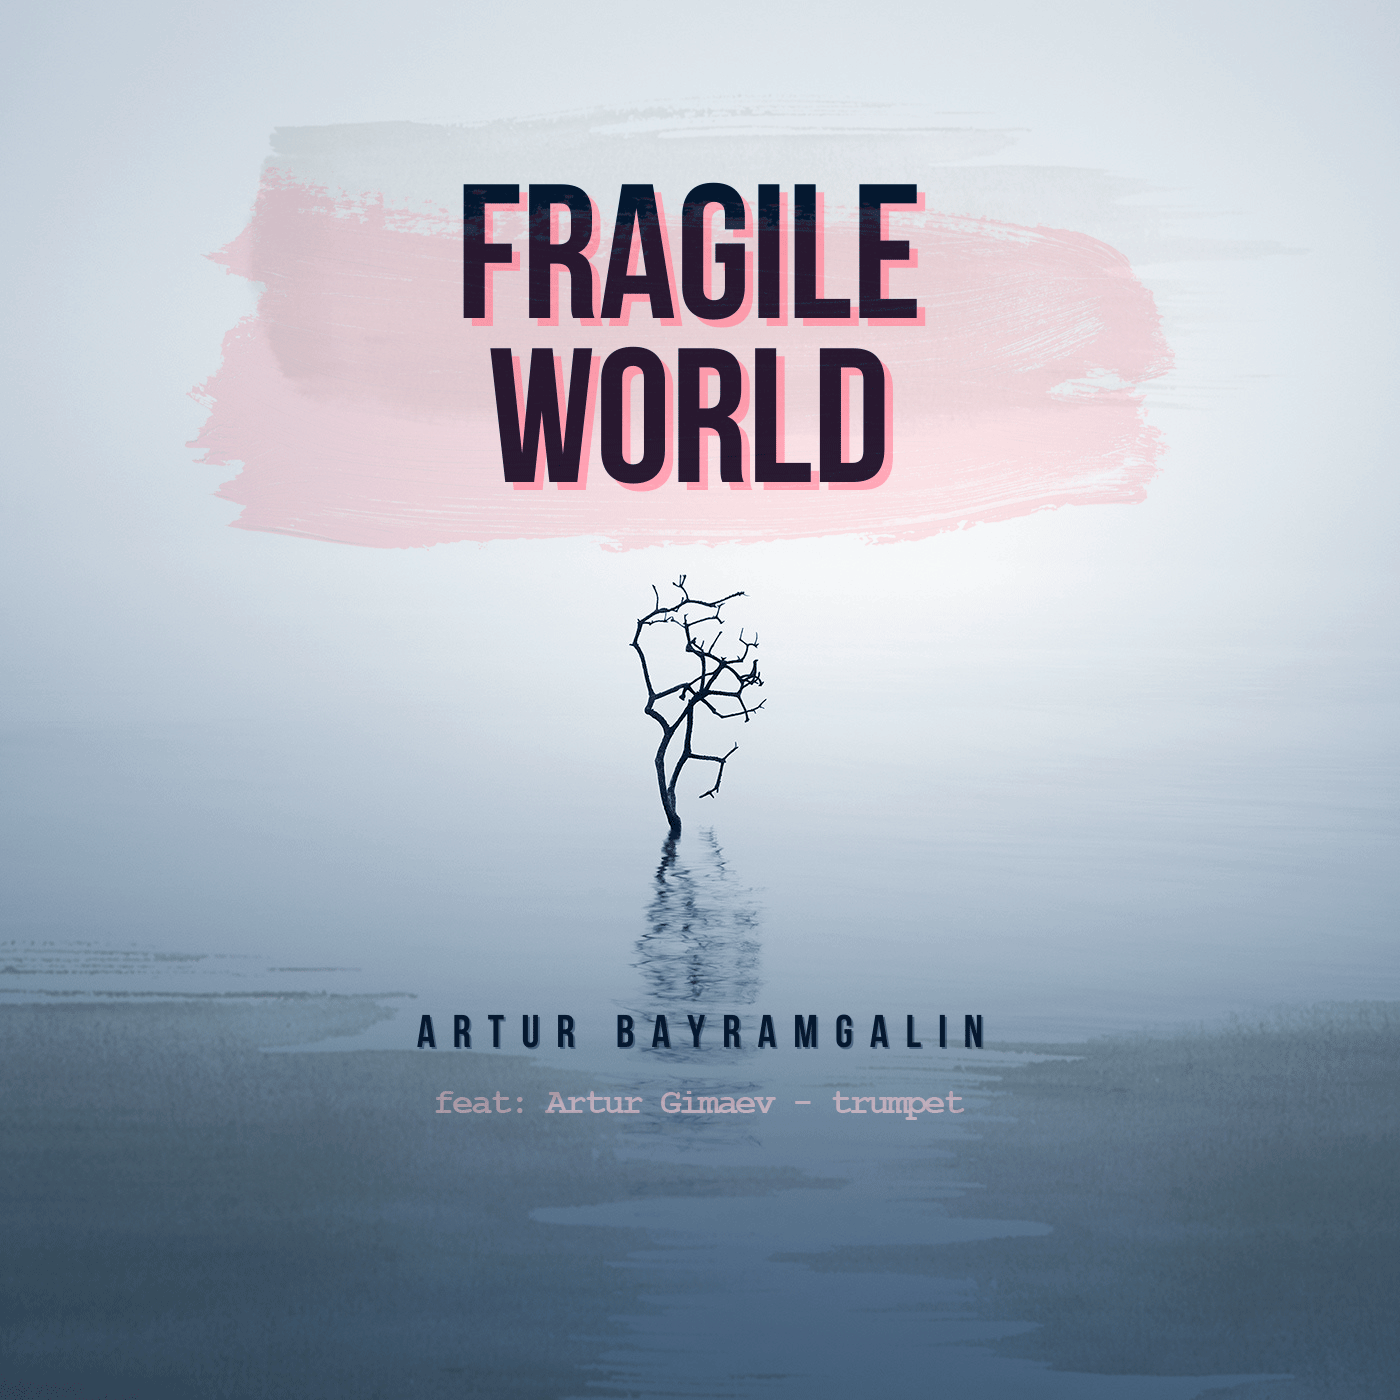 FRAGILE WORLD